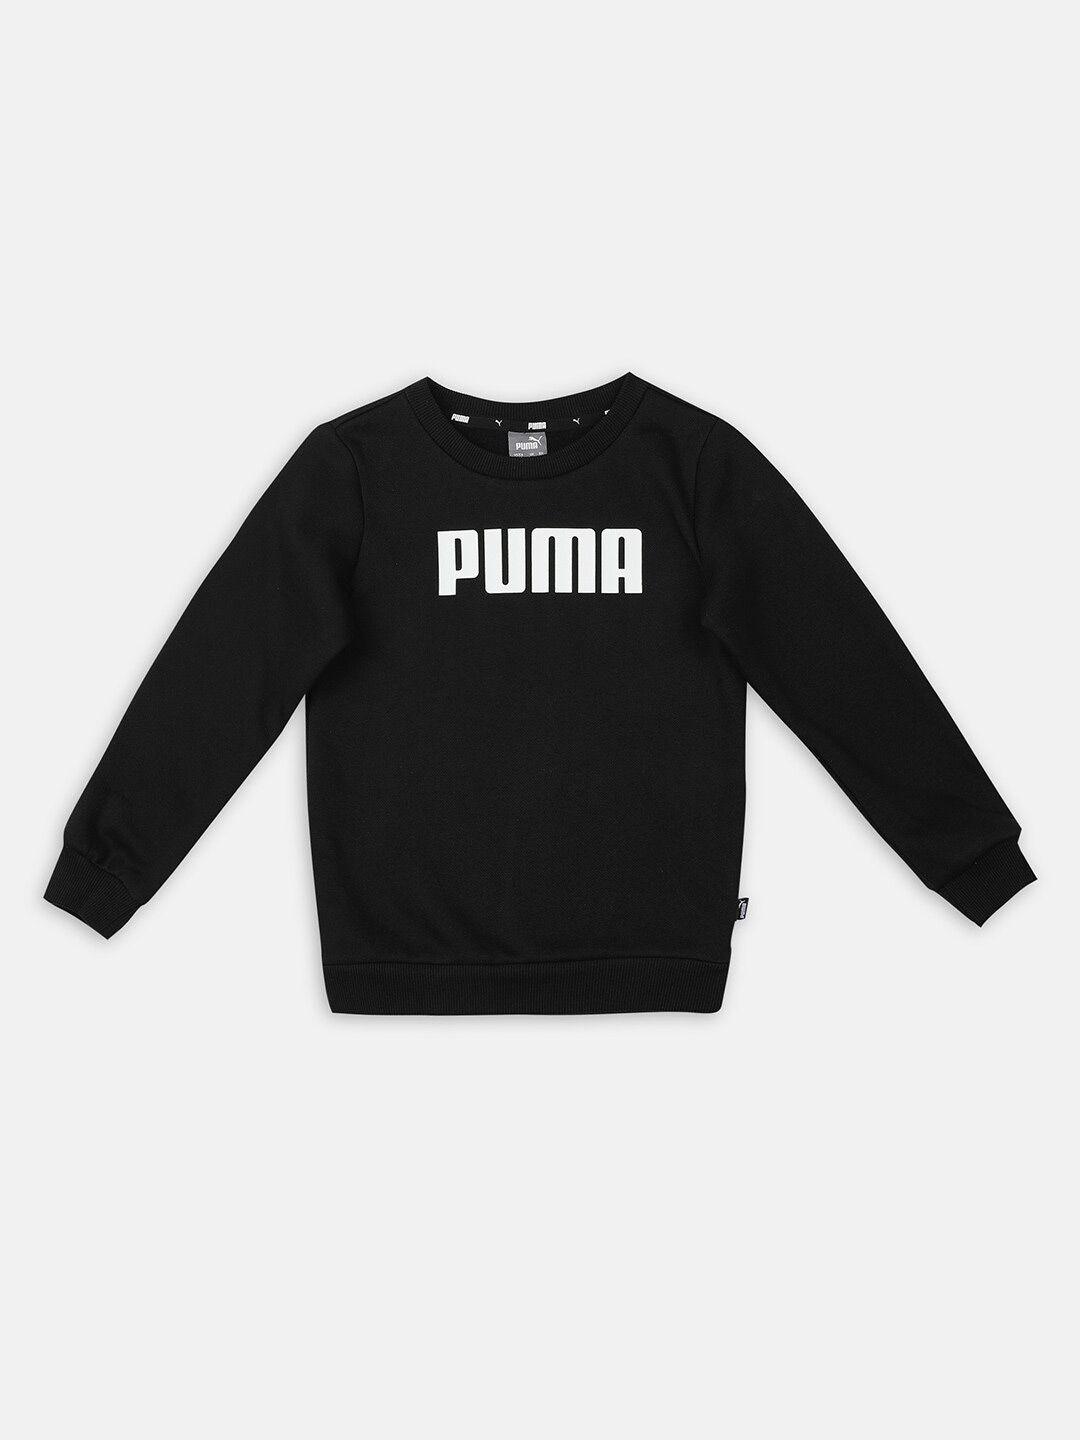 puma-boys-black-cotton-ess-crew-fl-sweatshirt